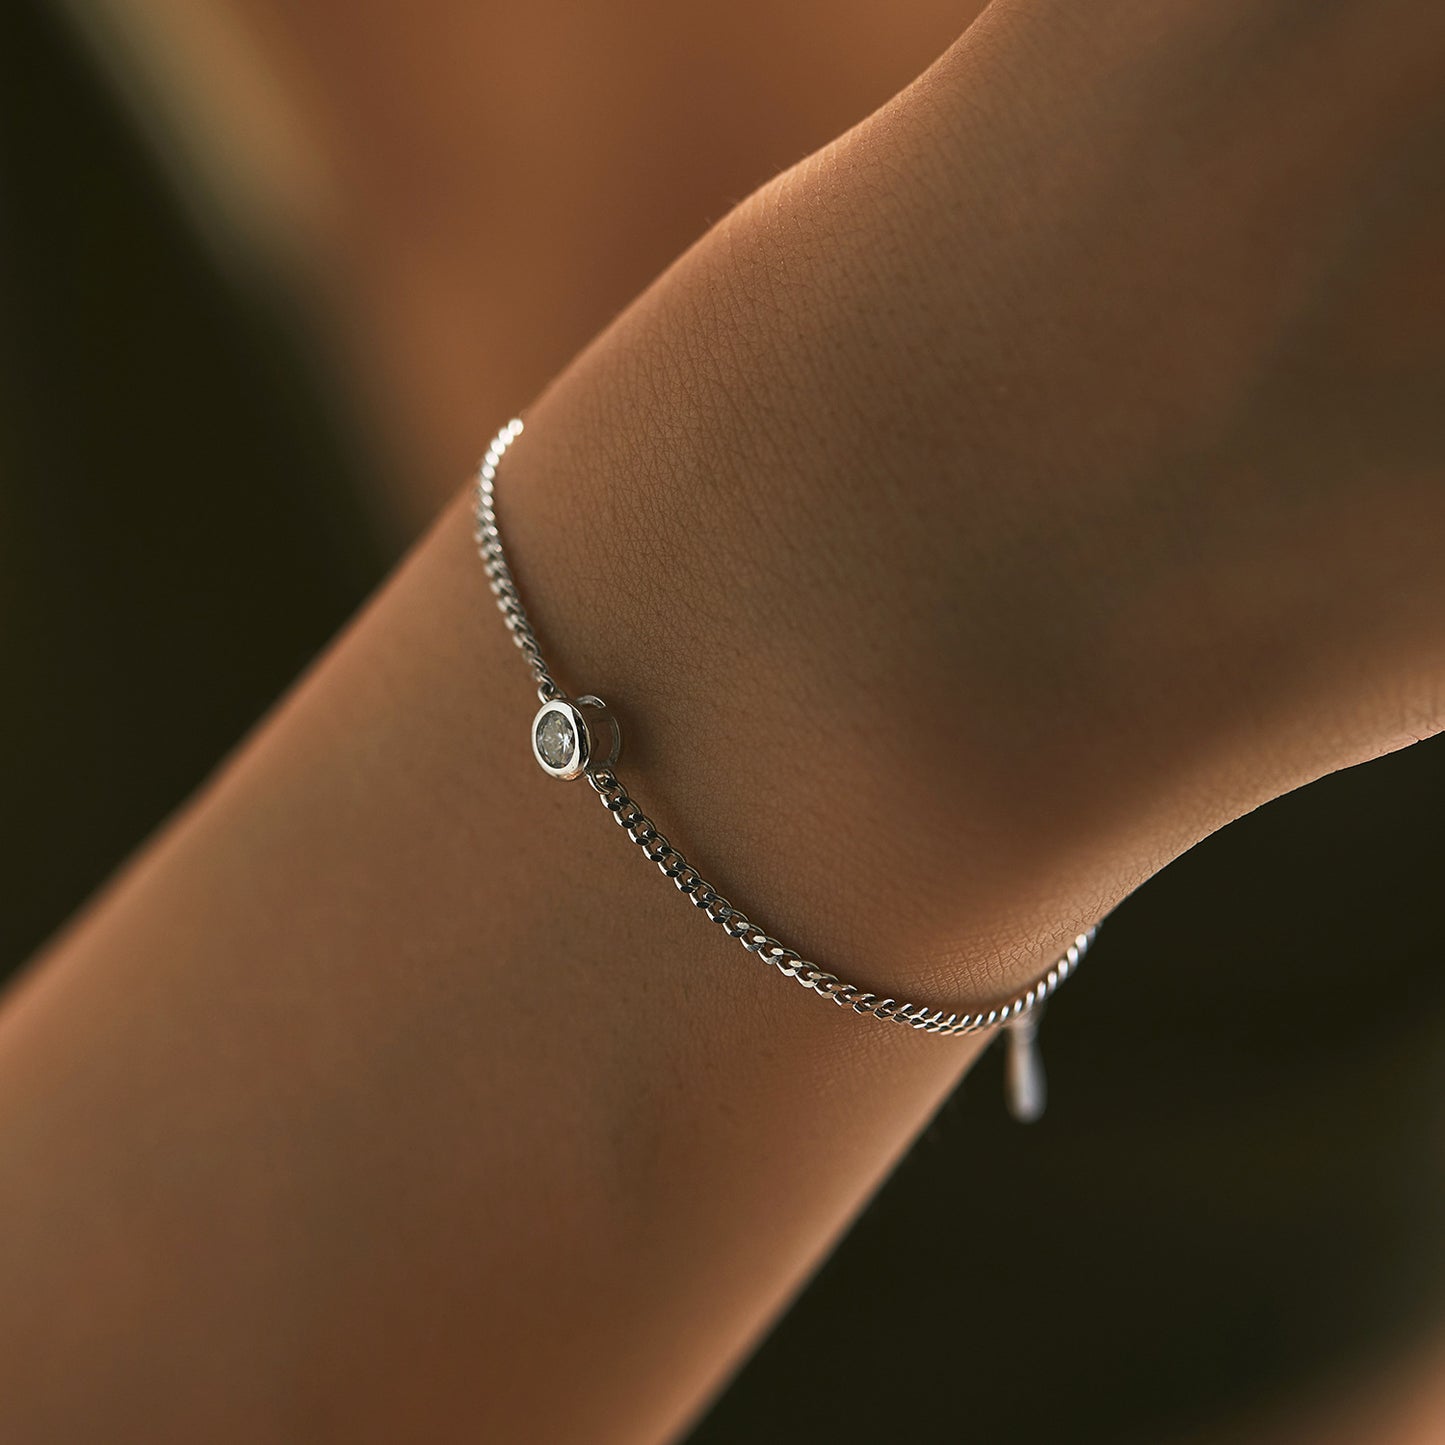 Sparkling Moissanite Sterling Silver Bracelet - Elegant and Simple Korean Jewelry